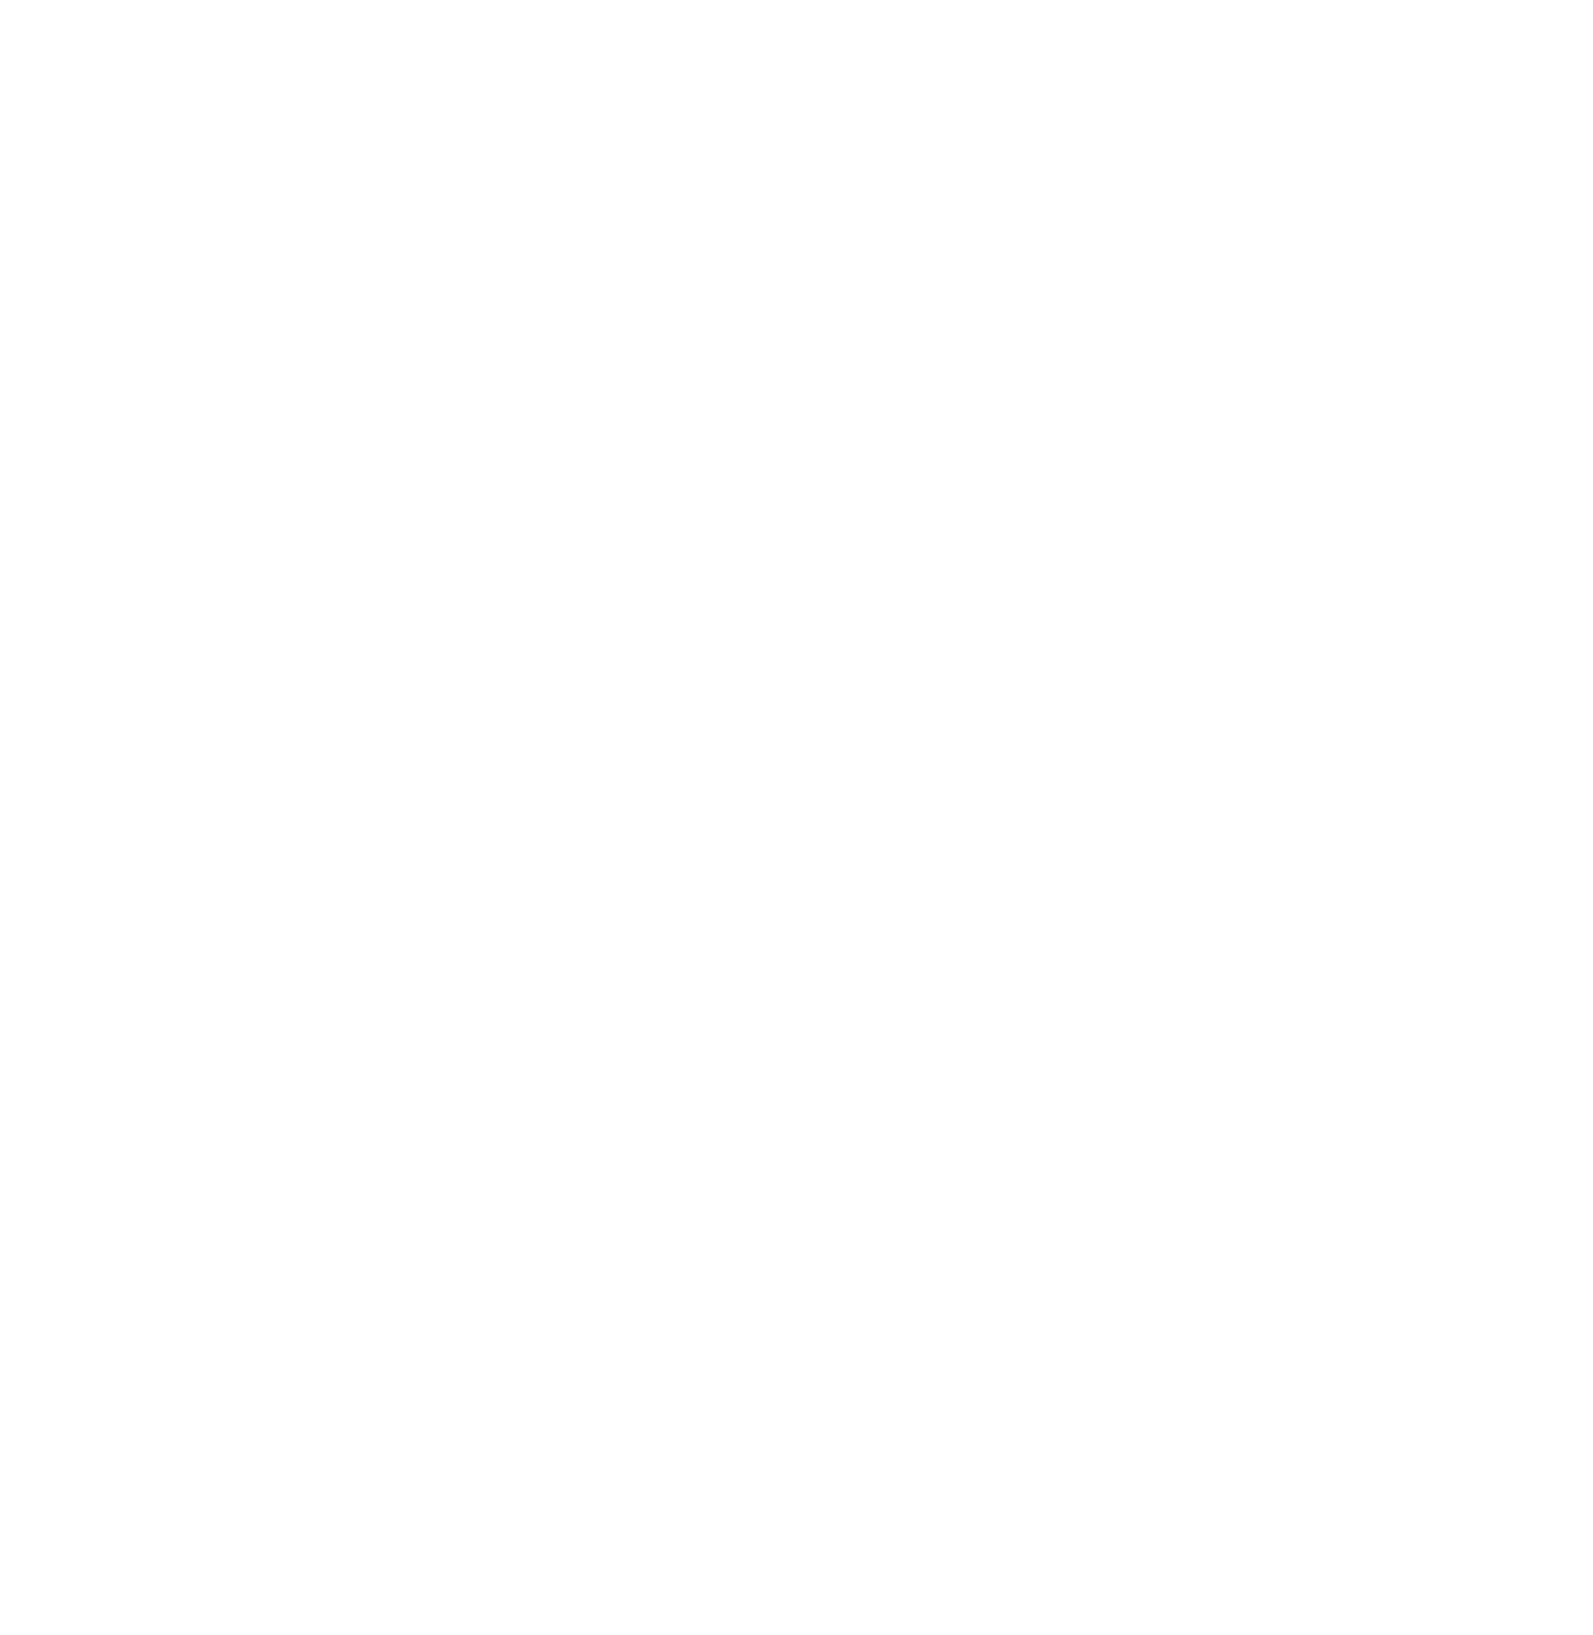 PChem (Petronas Chemicals Group) logo large for dark backgrounds (transparent PNG)